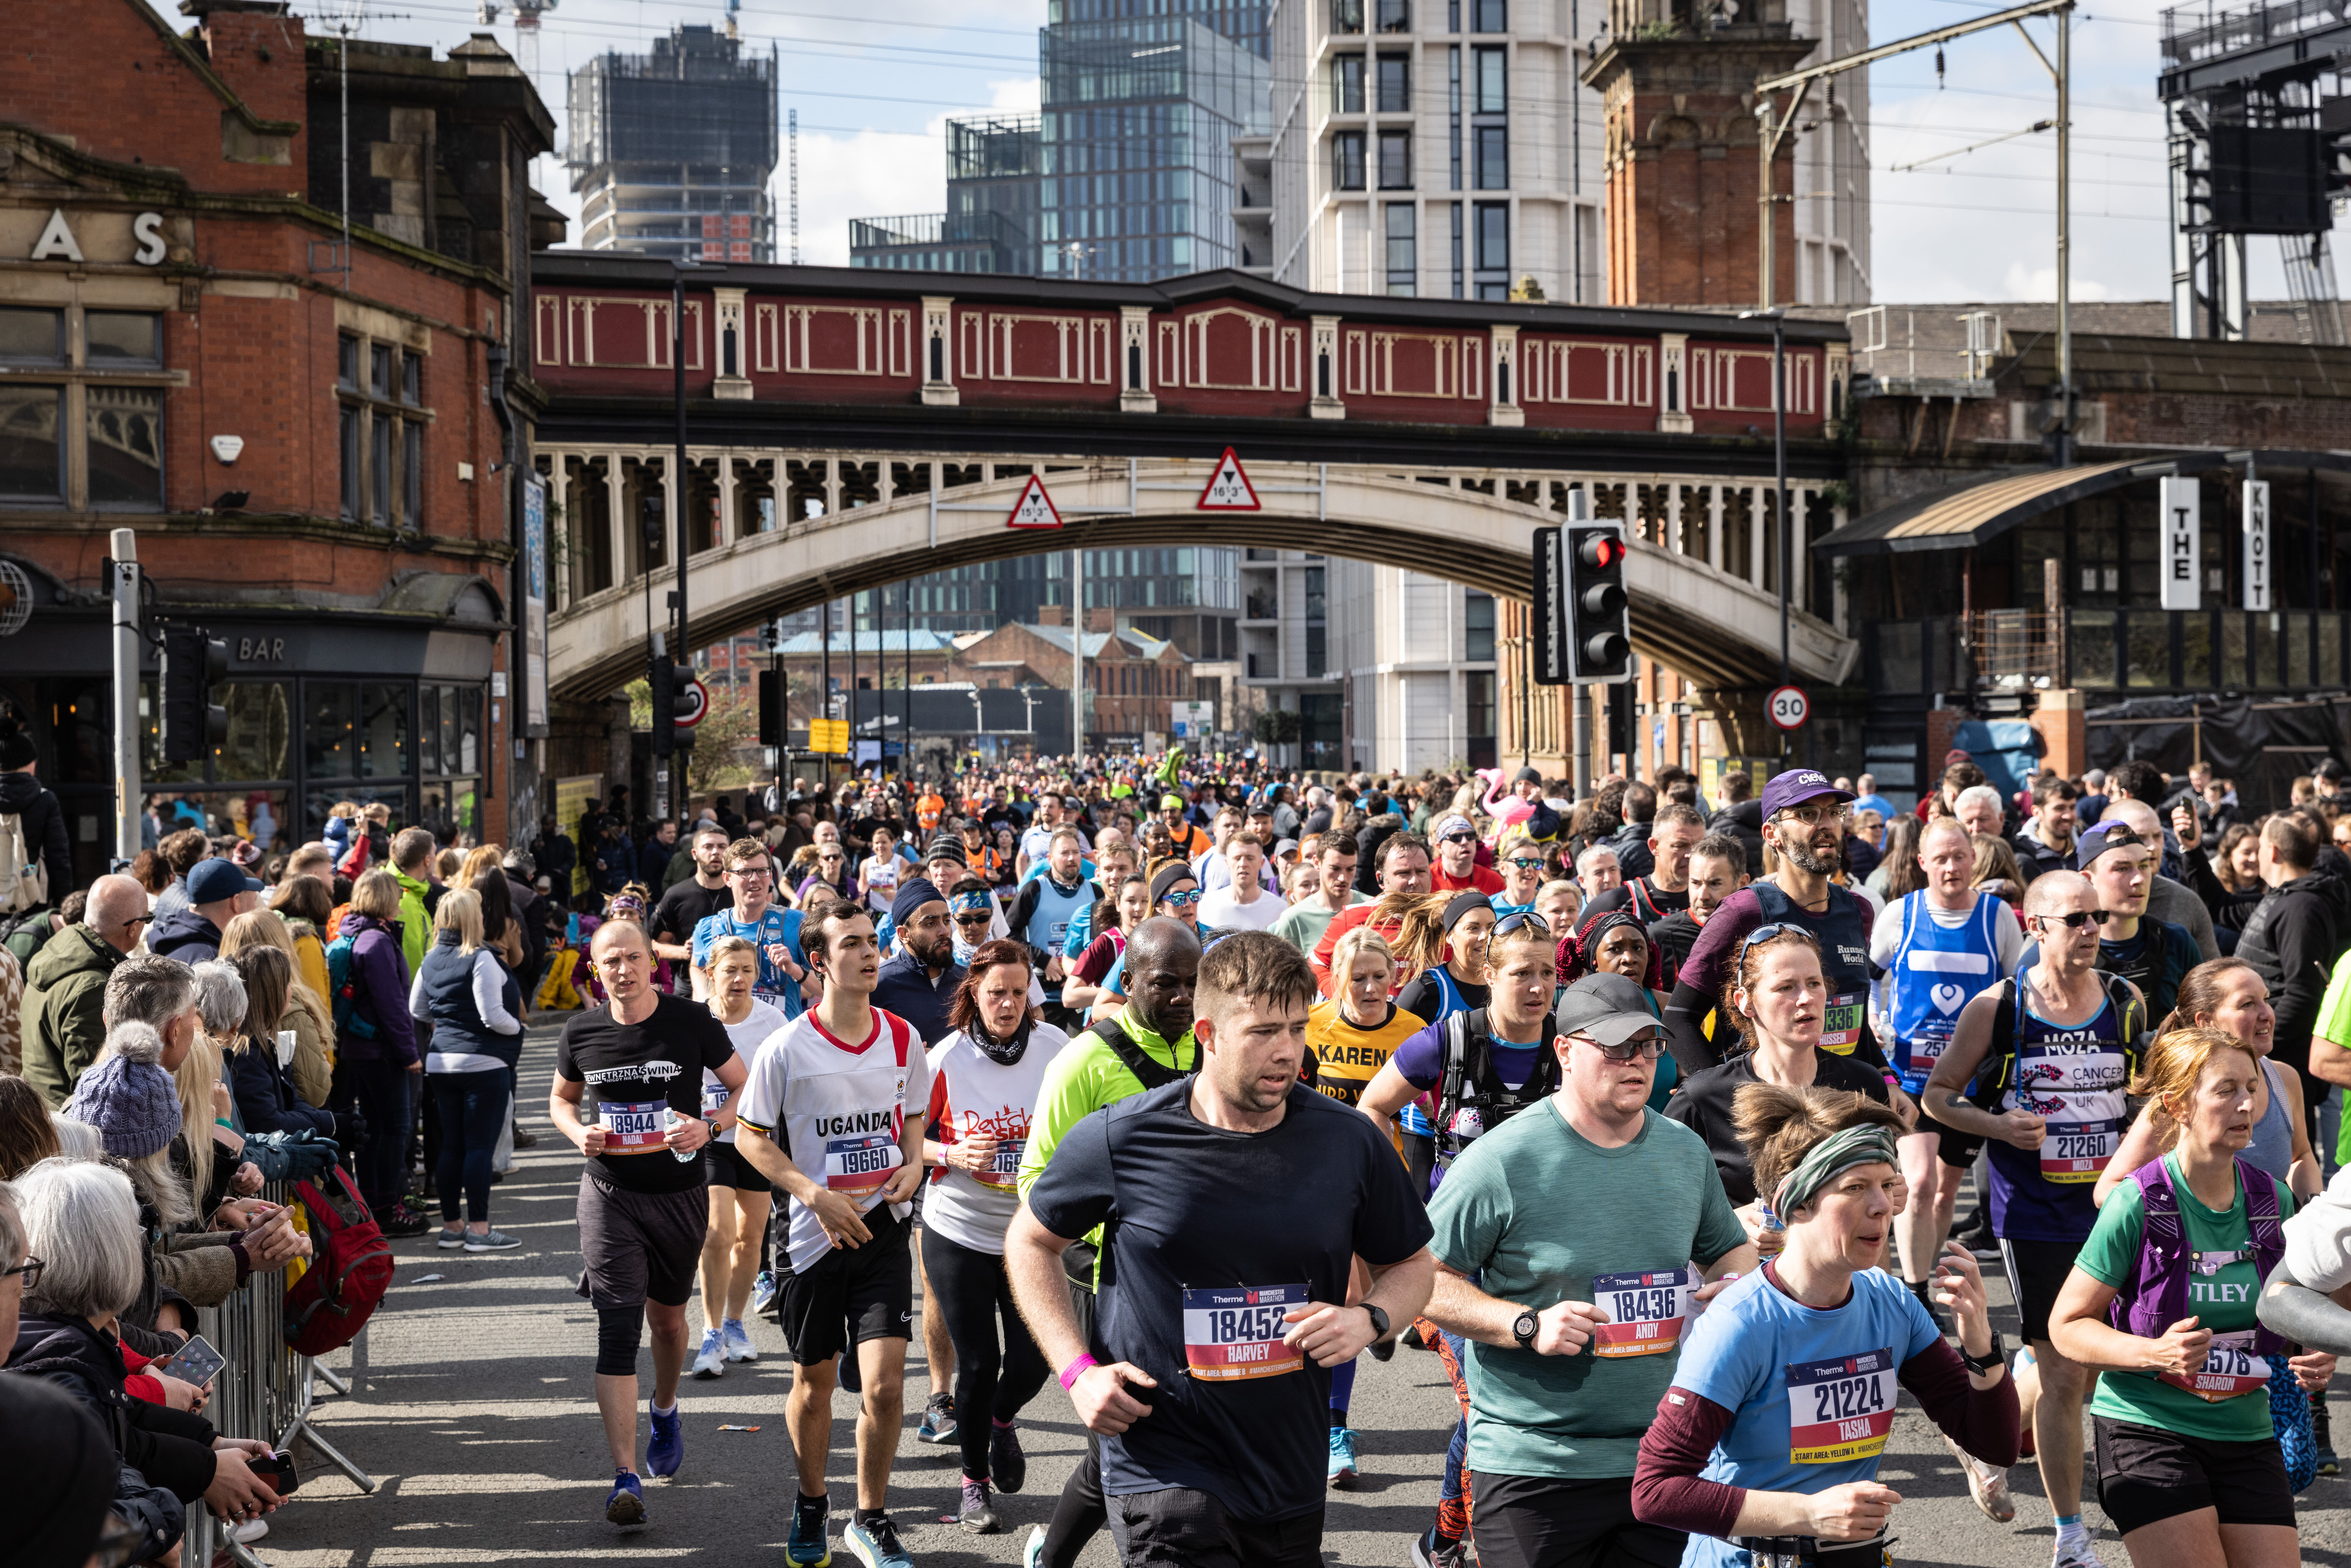 Run through the city centre in this marathon